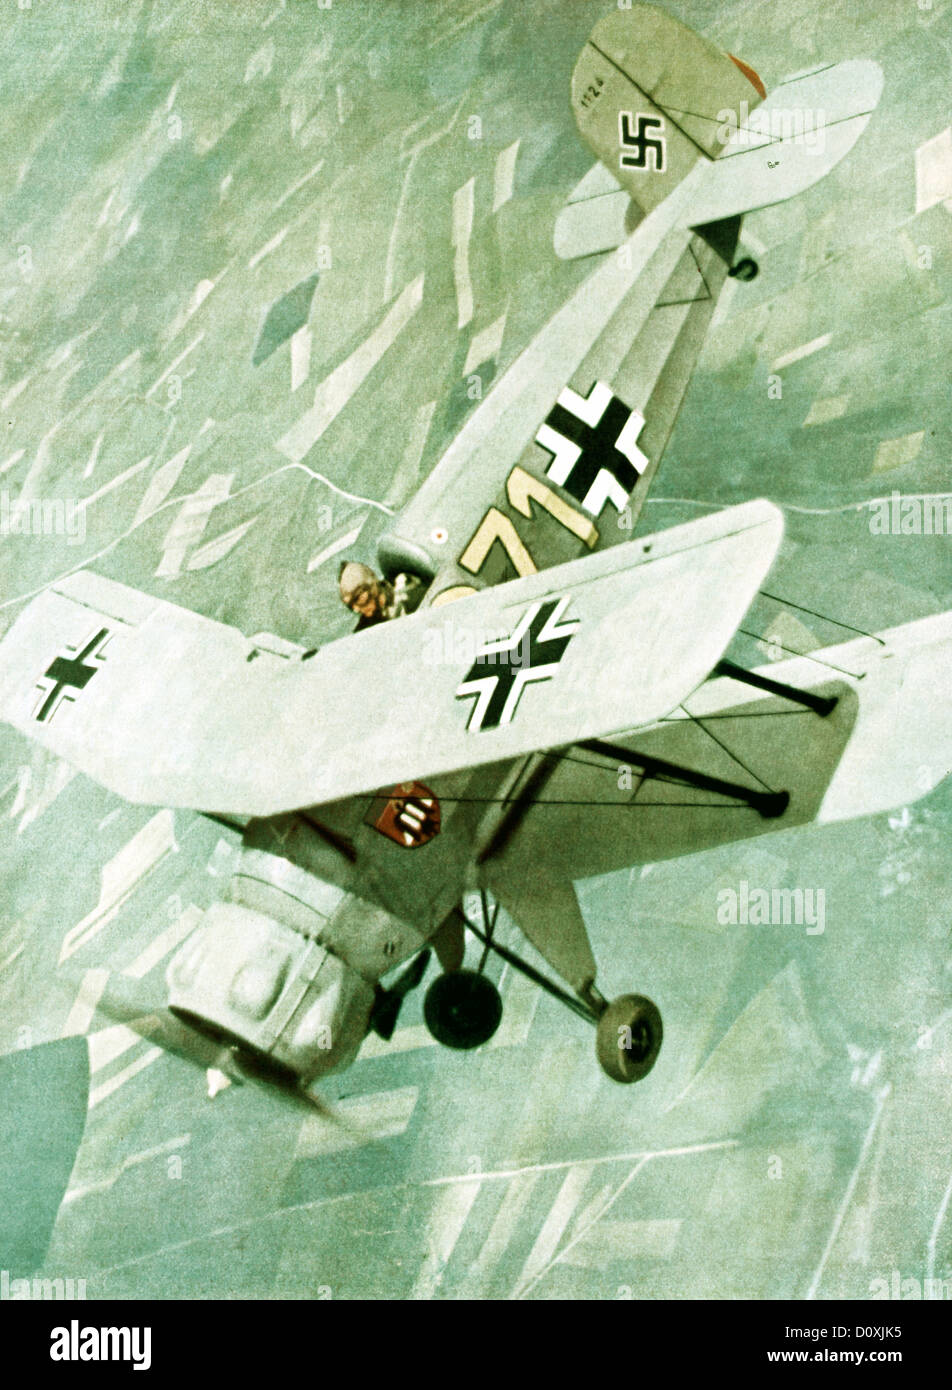 Bucker Bu 133 Jungmeister training aircraft, biplane, swastika, Luftwaffe, World War II, Germany, 1940 Stock Photo